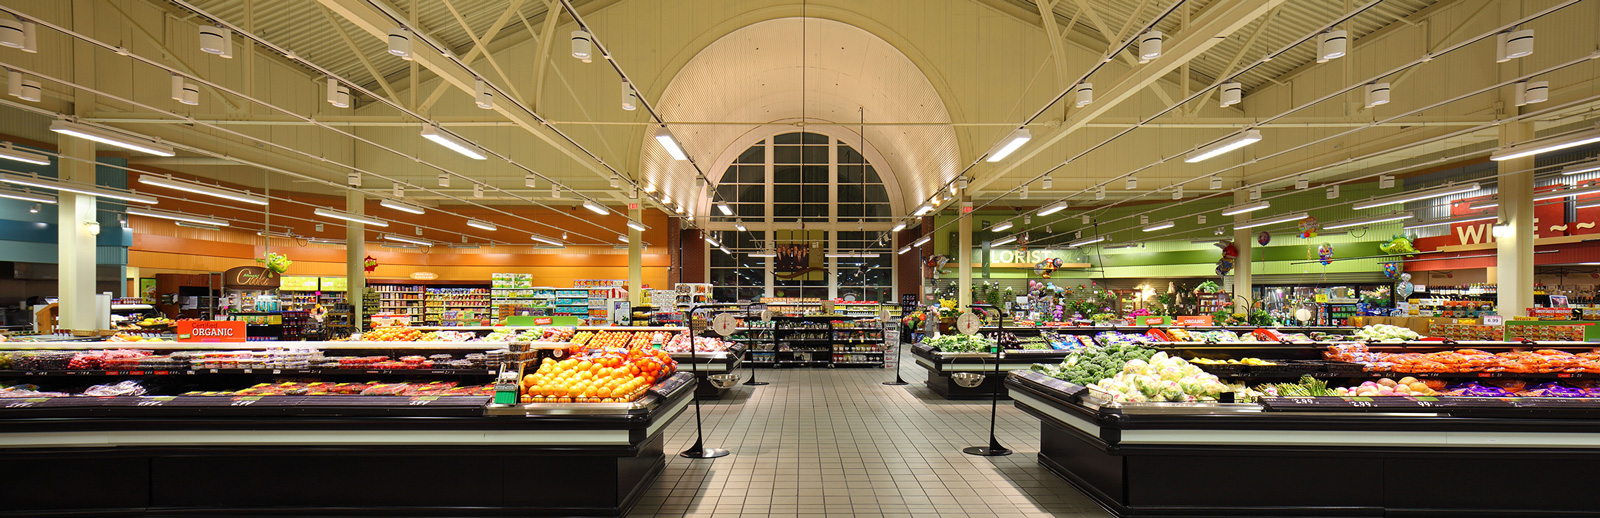 busSTRUT Supermarket Projects